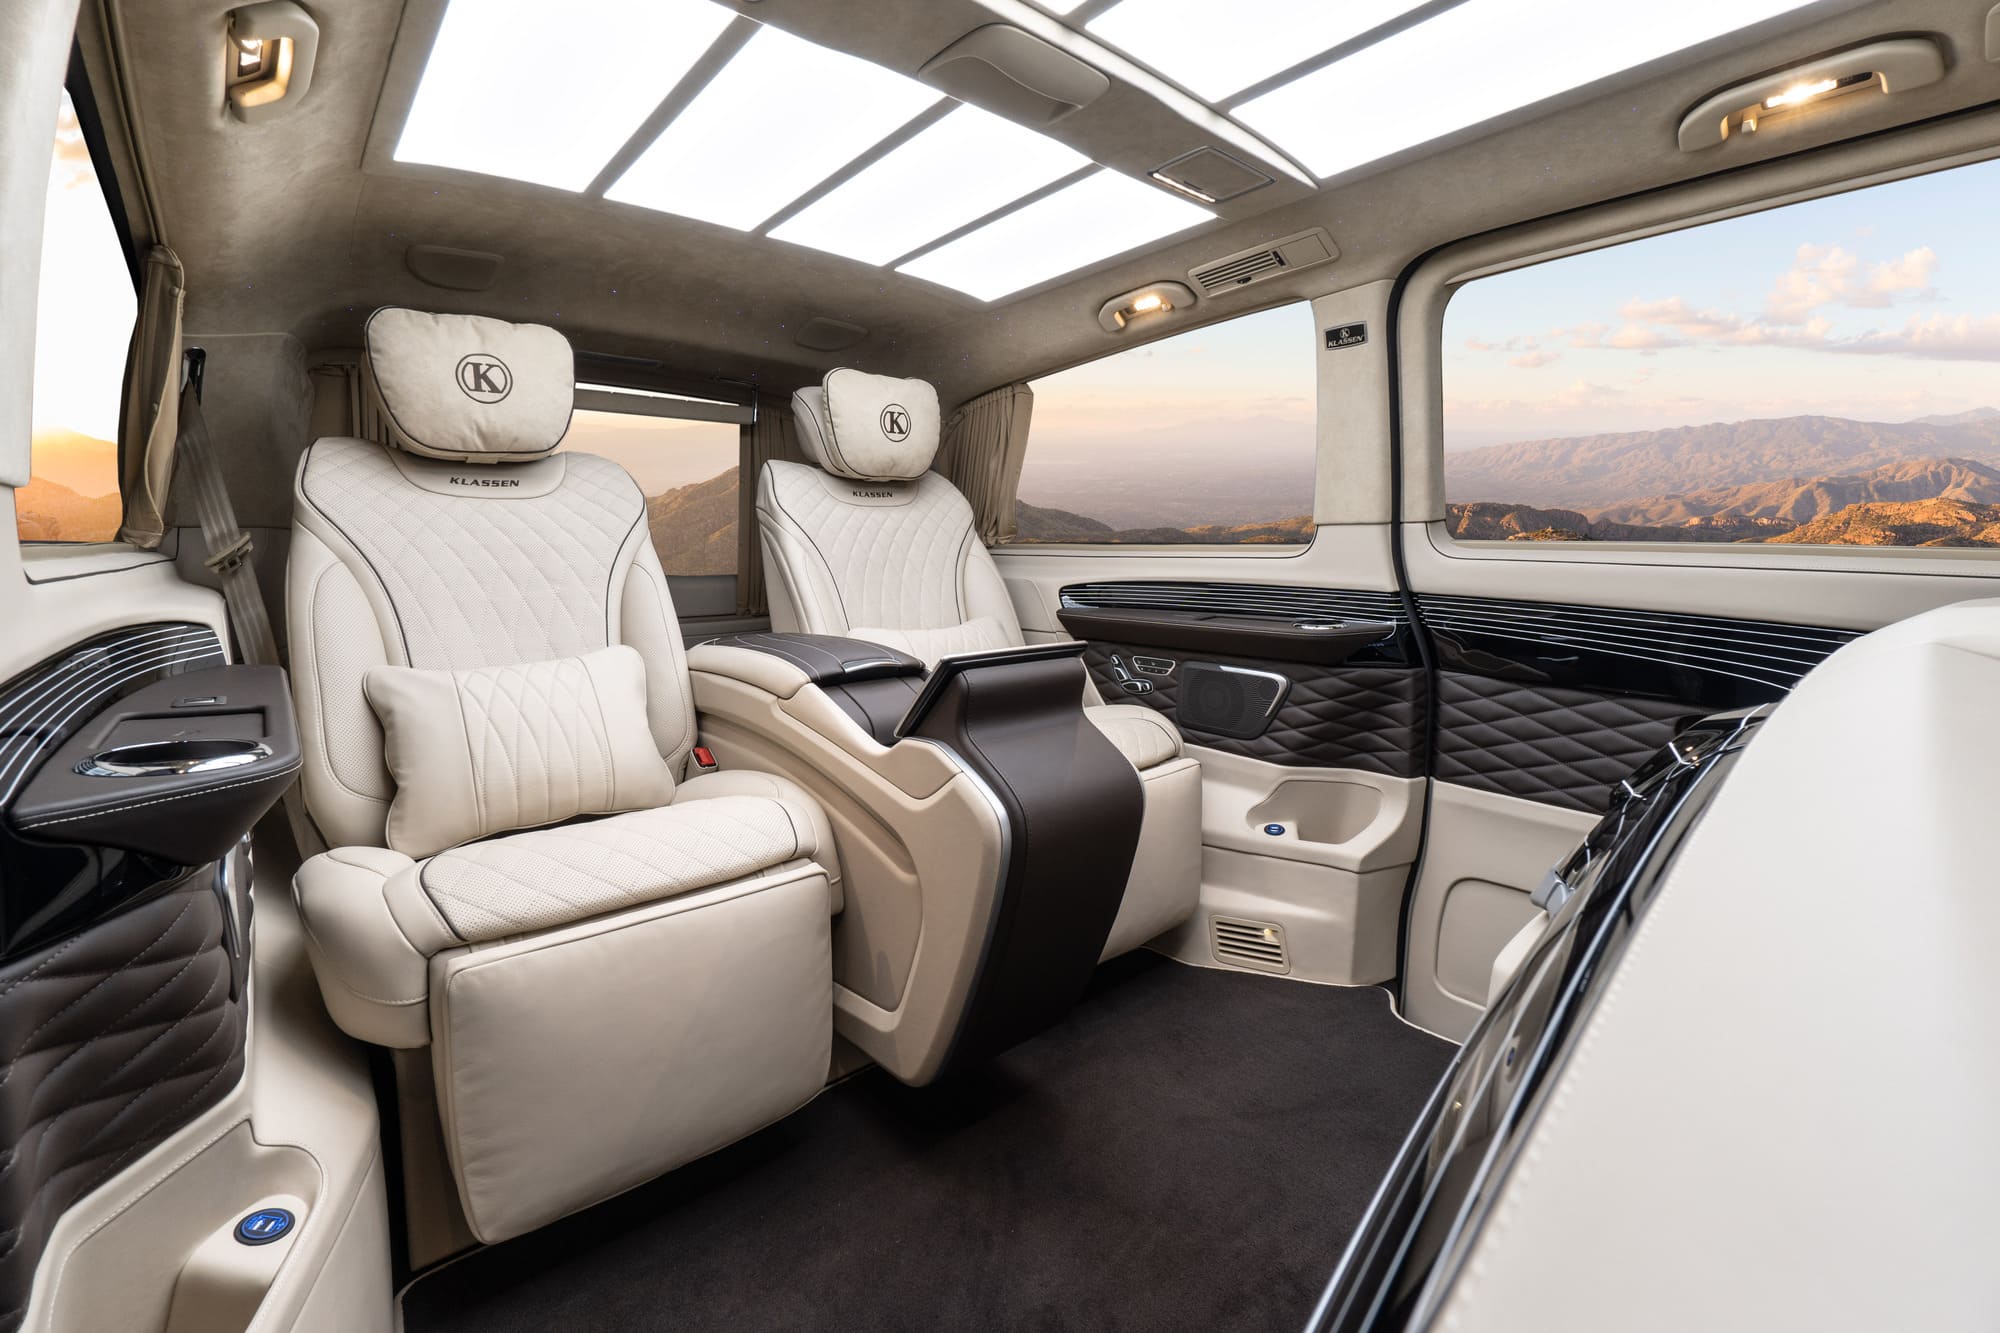 Luxury/VIP Auto/Passenger Bus Seat for Mercedes Benz Vito/V-Class